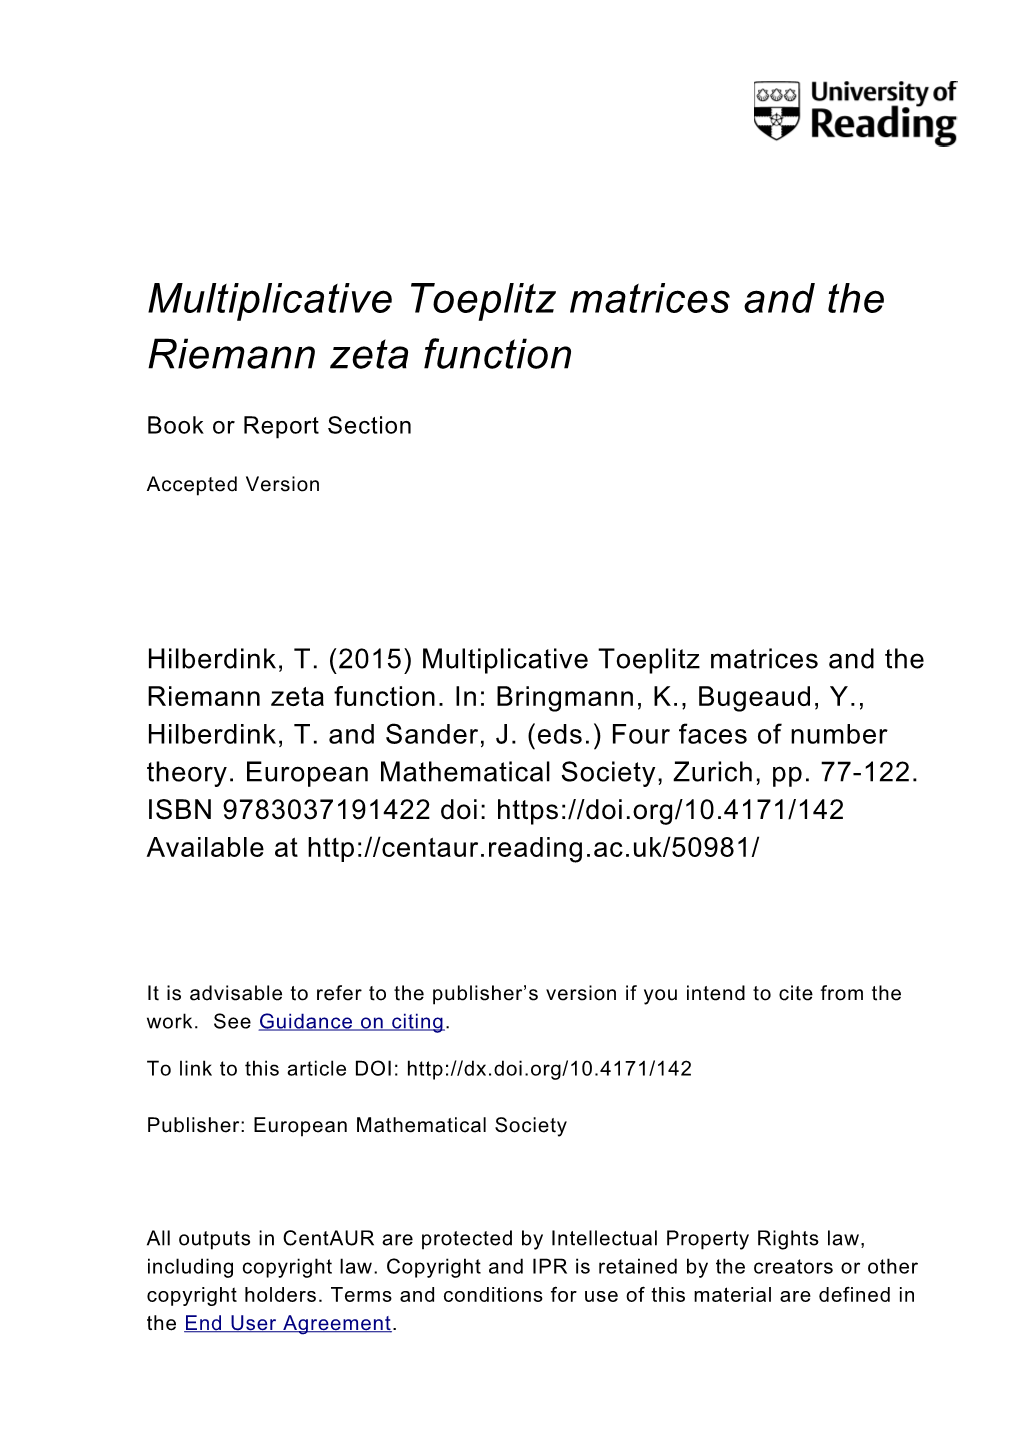 Multiplicative Toeplitz Matrices and the Riemann Zeta Function